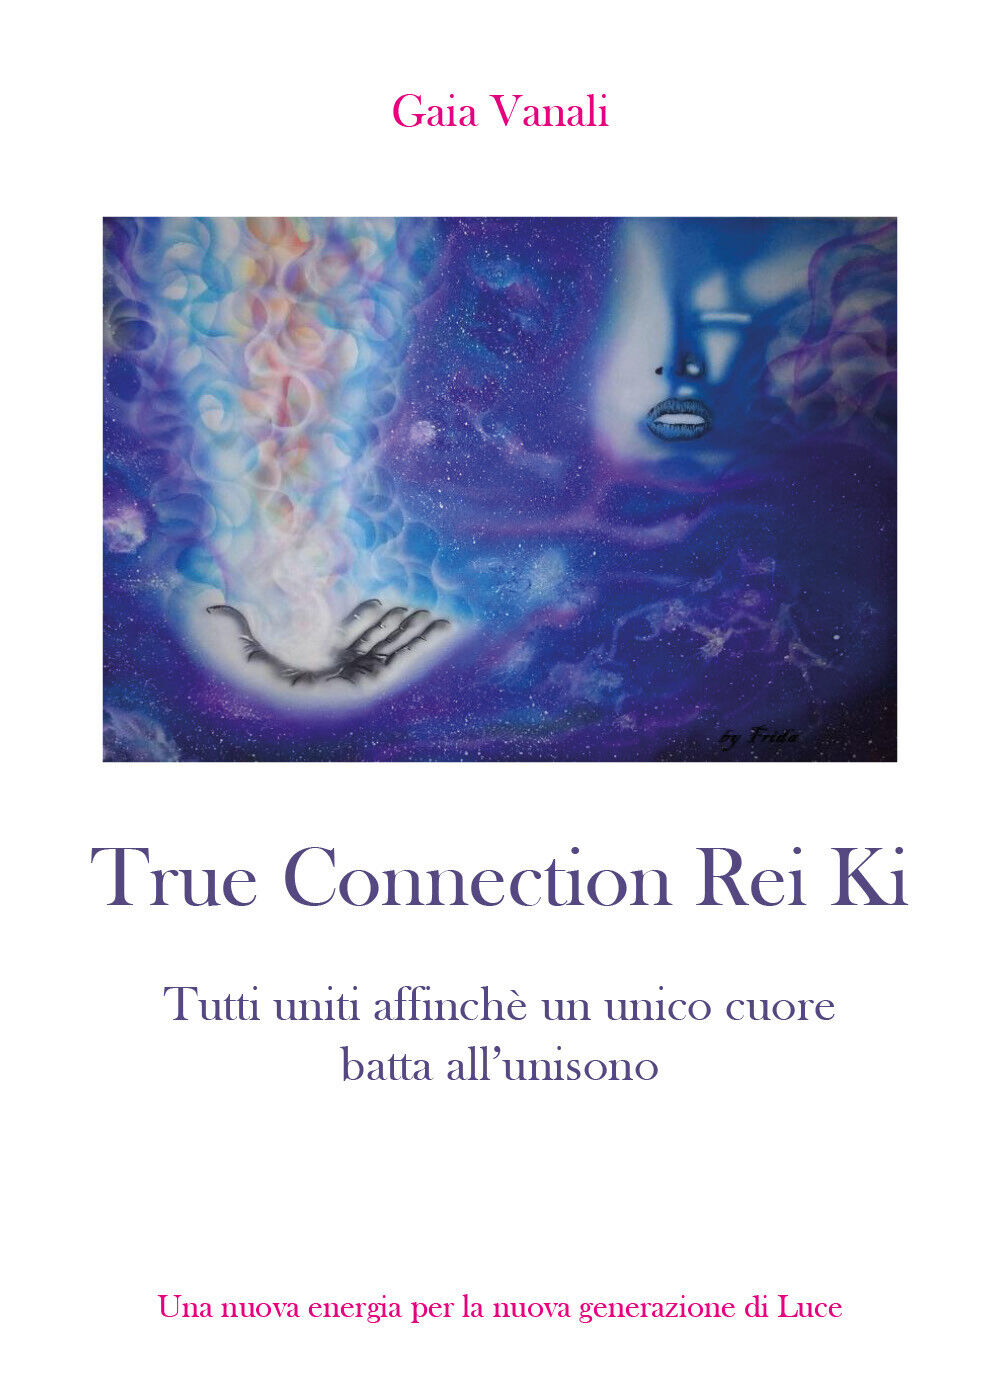 True connection rei ki, Gaia Vanali,  2019,  Youcanprint